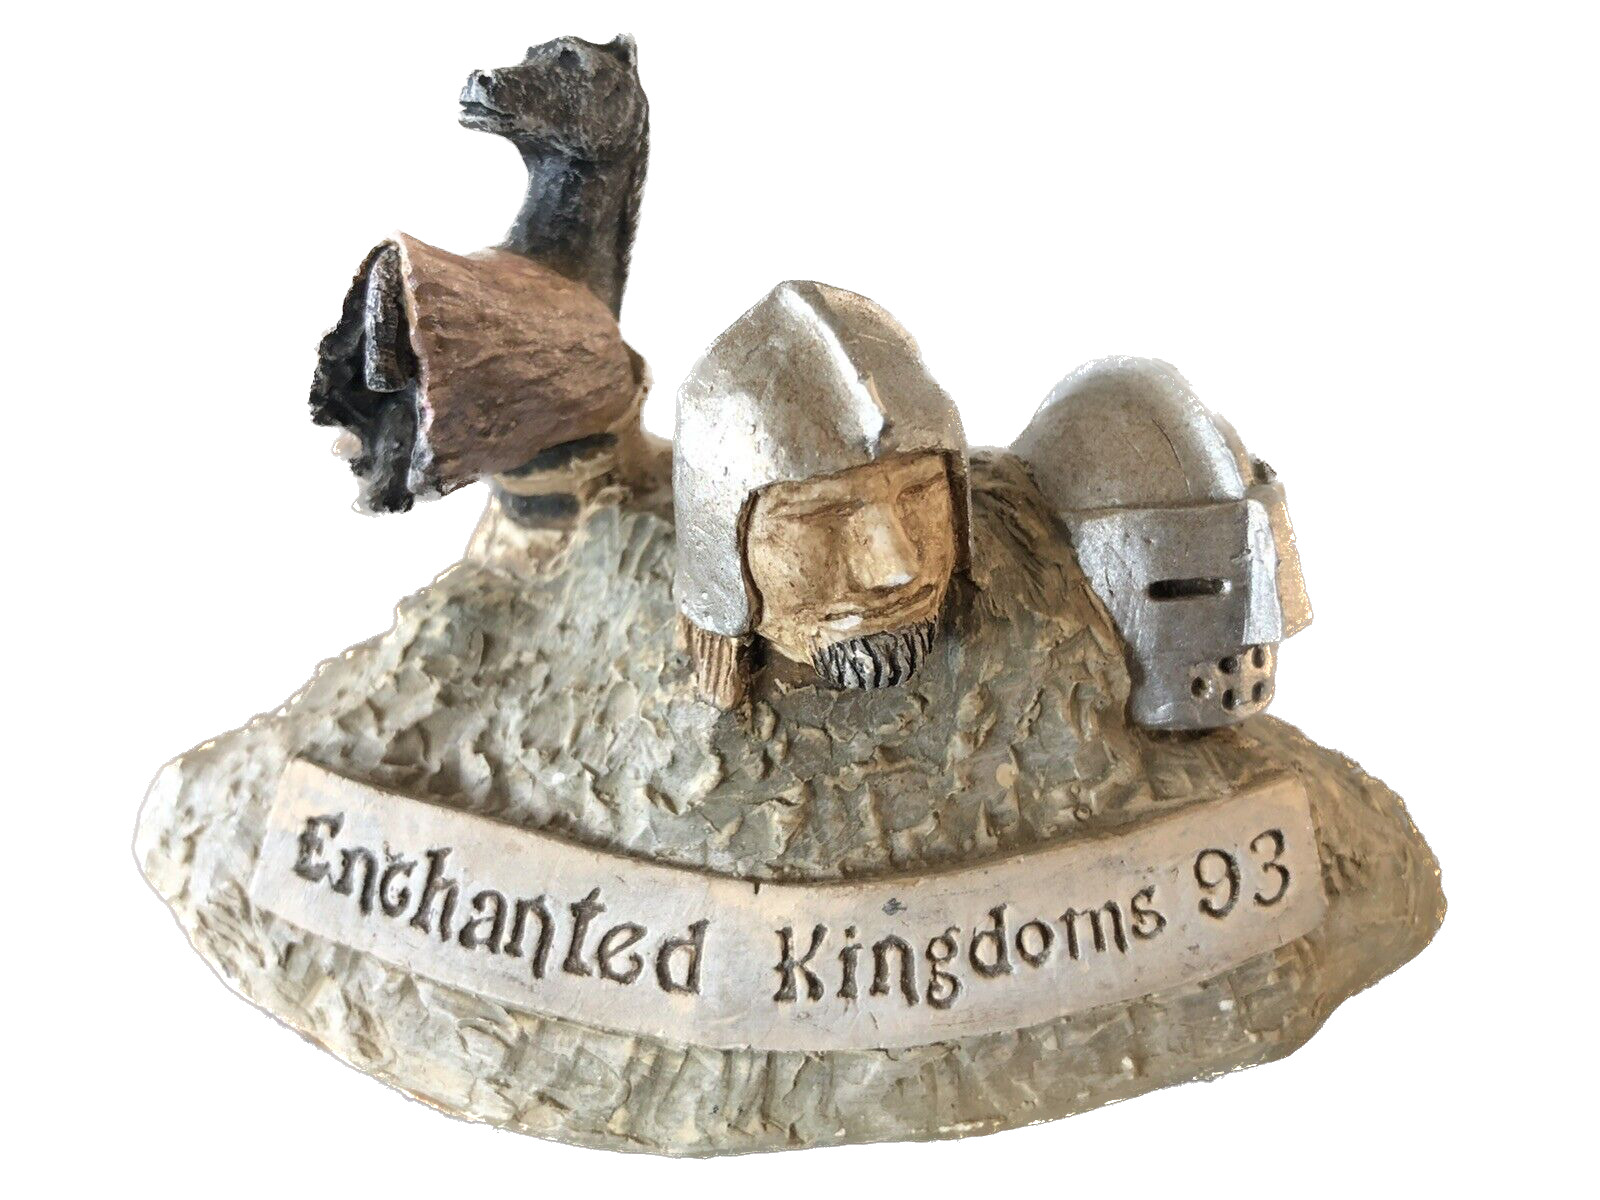 John Hopkins 1993 - Enchanted Kingdoms - Membership Plaque